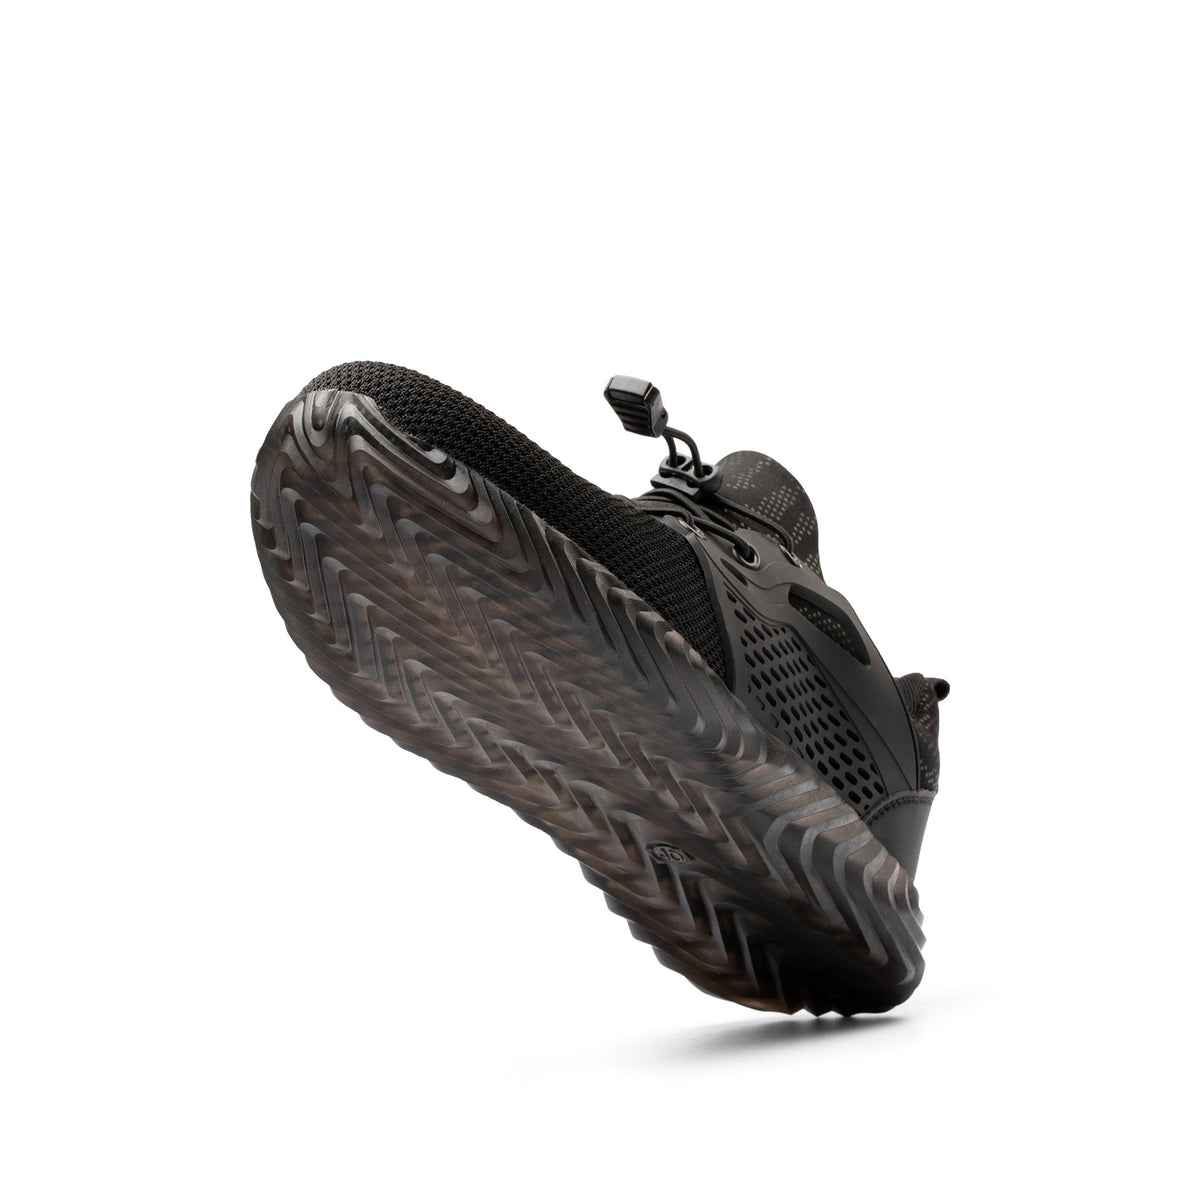 Ryder 1.5 Indestructible Shoes - Indestructible Shoes